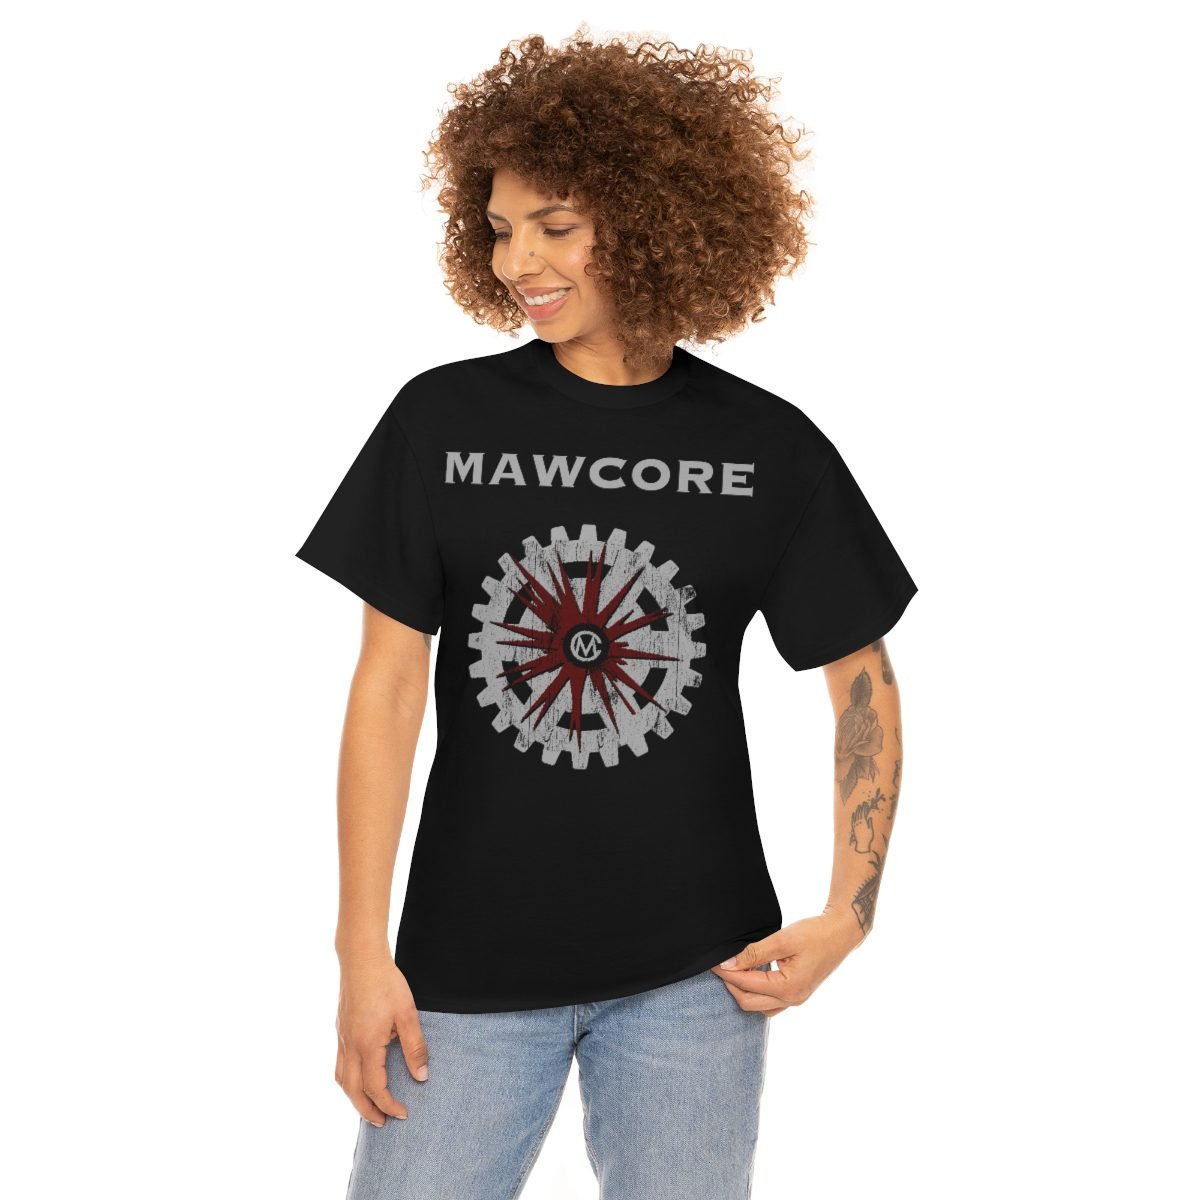 Mawcore Gear Short Sleeve Tshirt (5000)